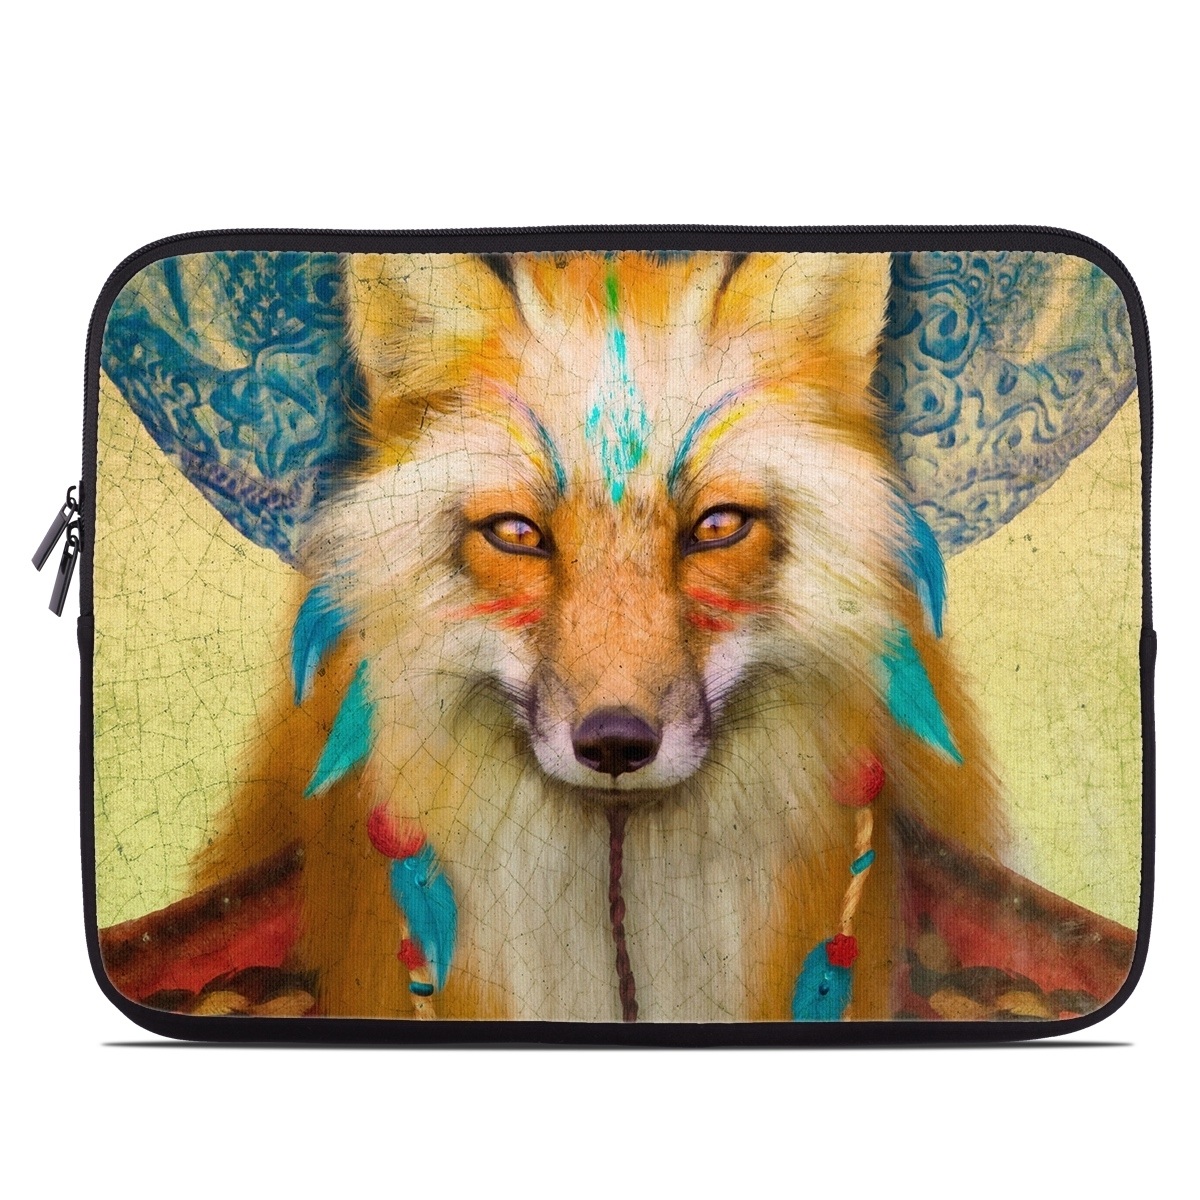 Laptop Sleeve - Wise Fox (Image 1)